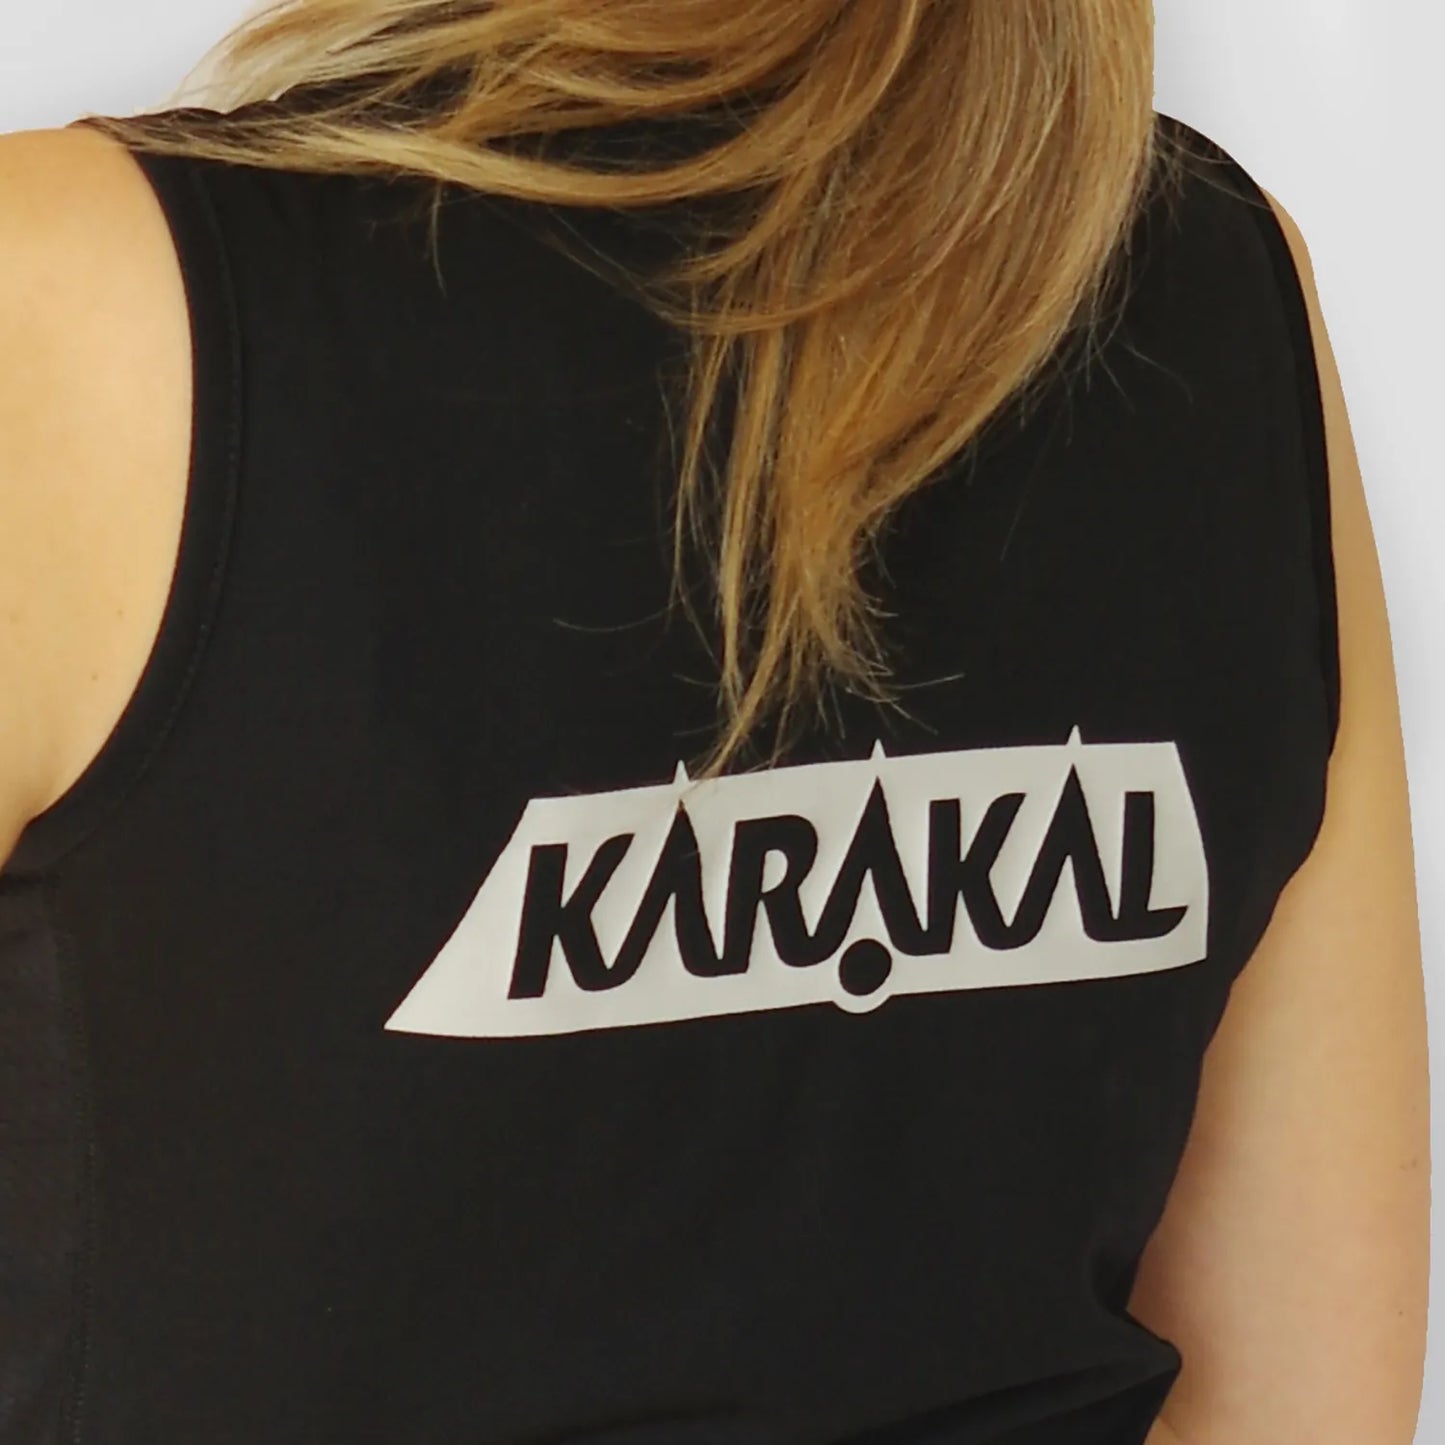 Karakal Pro Tour Ladies Vest